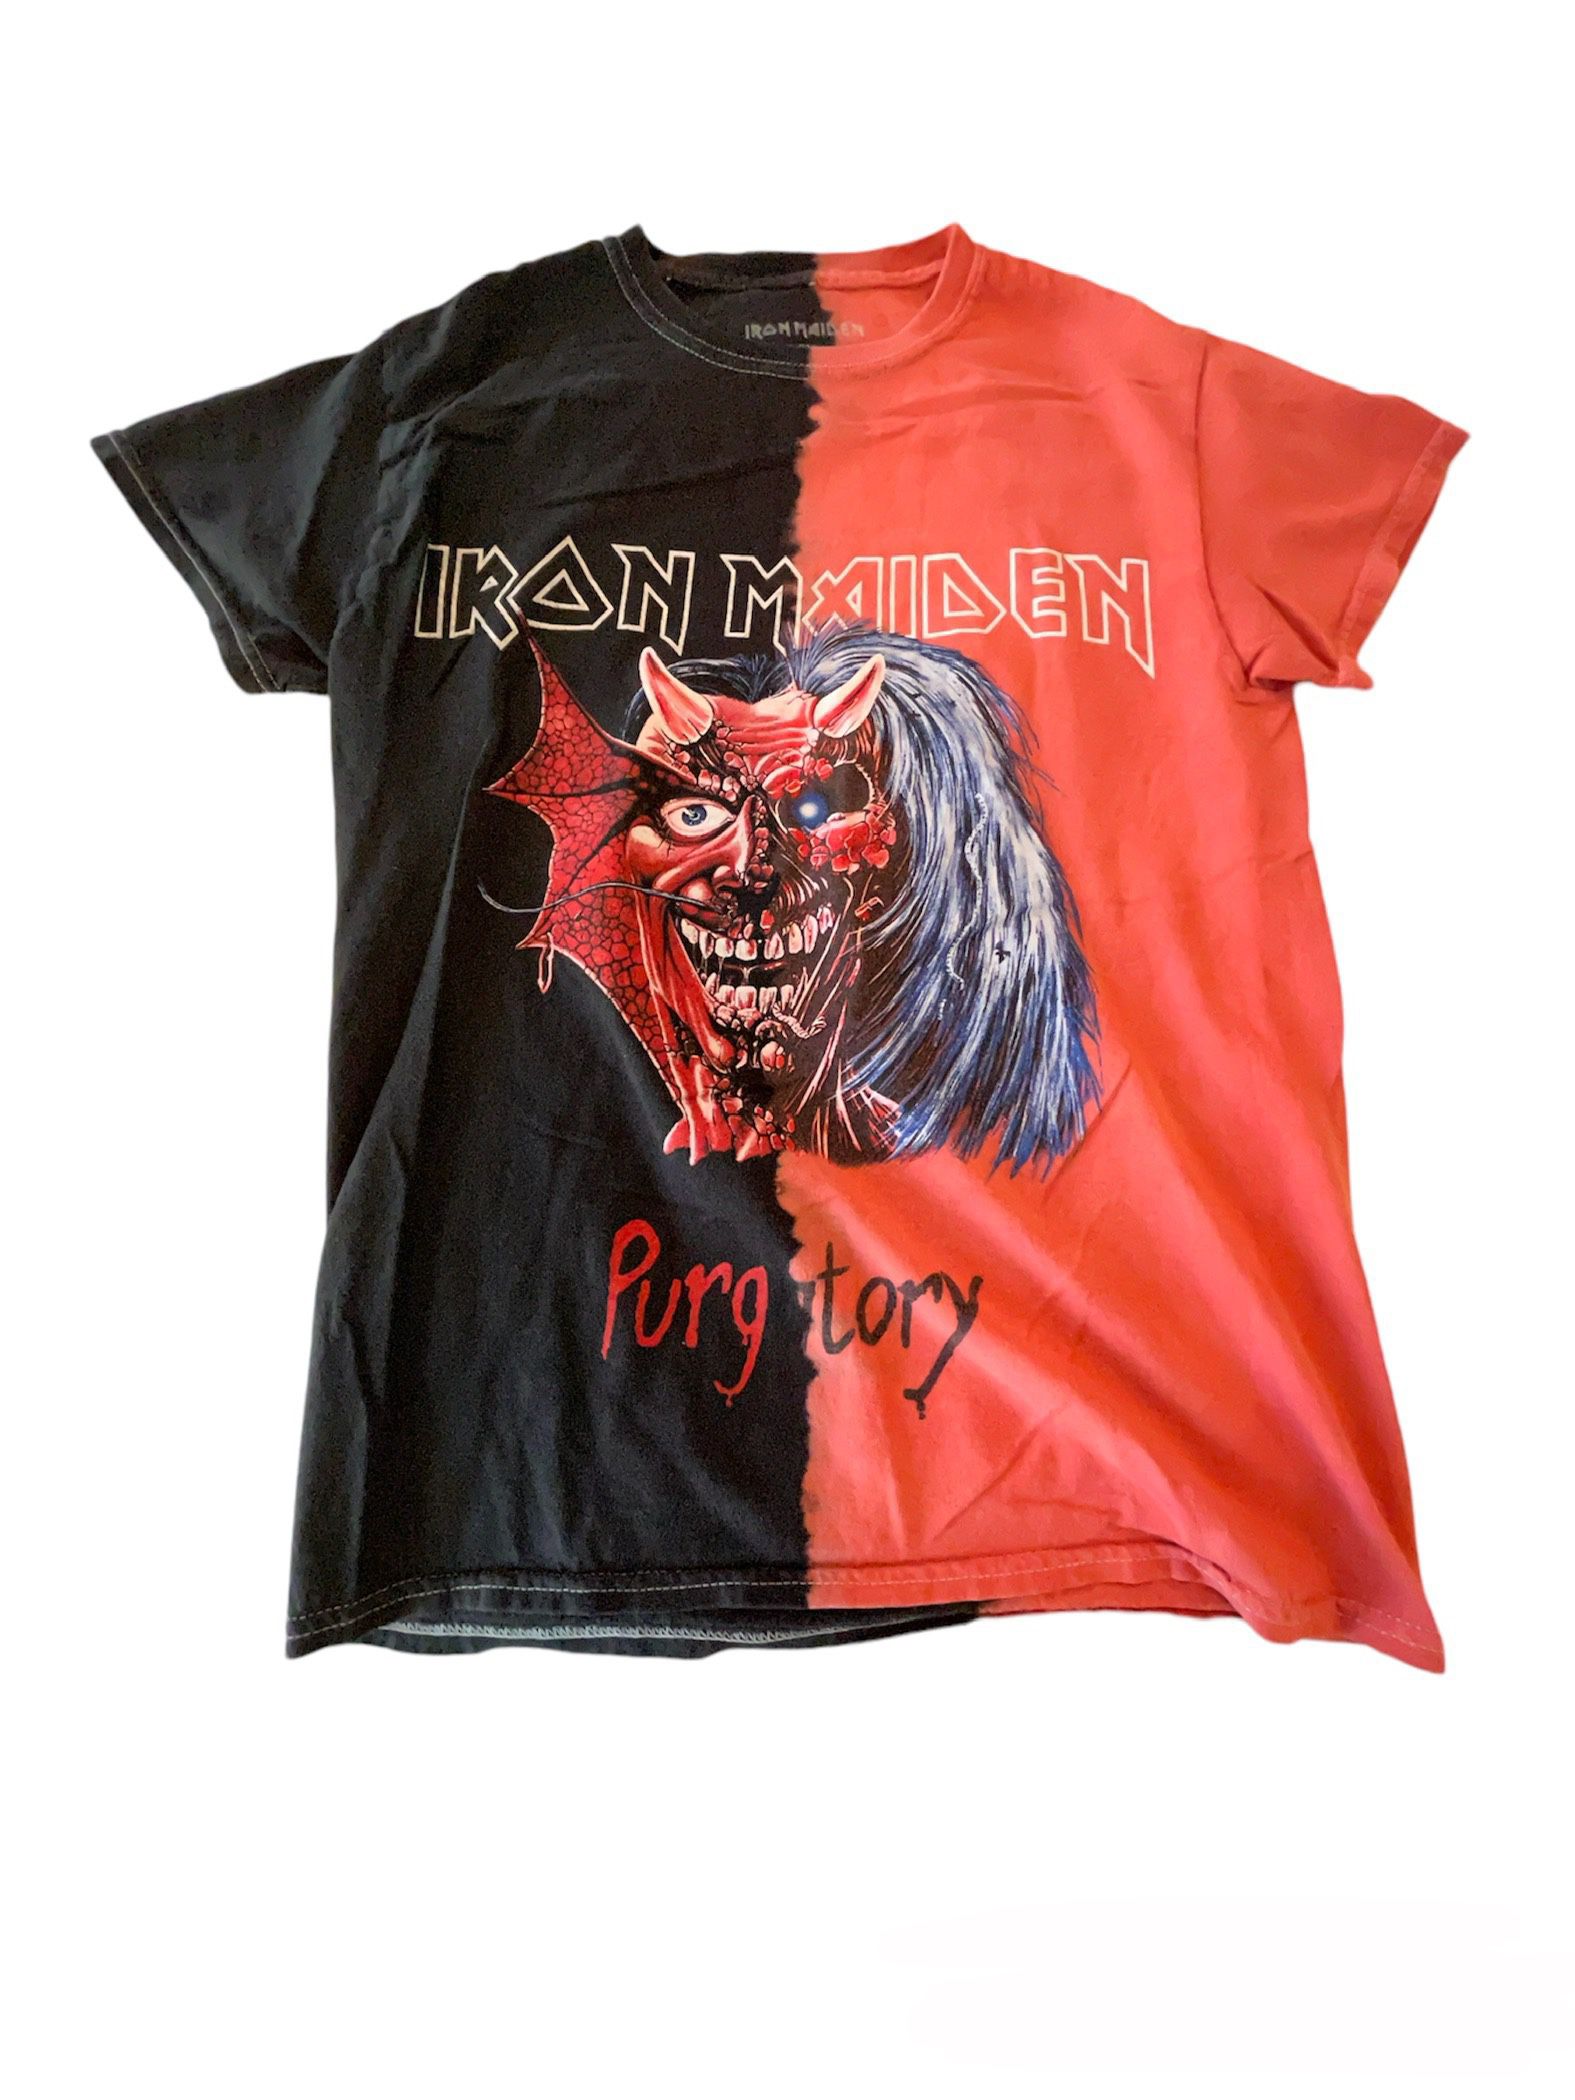 Small Iron Maiden Shirt Half Black Half Red